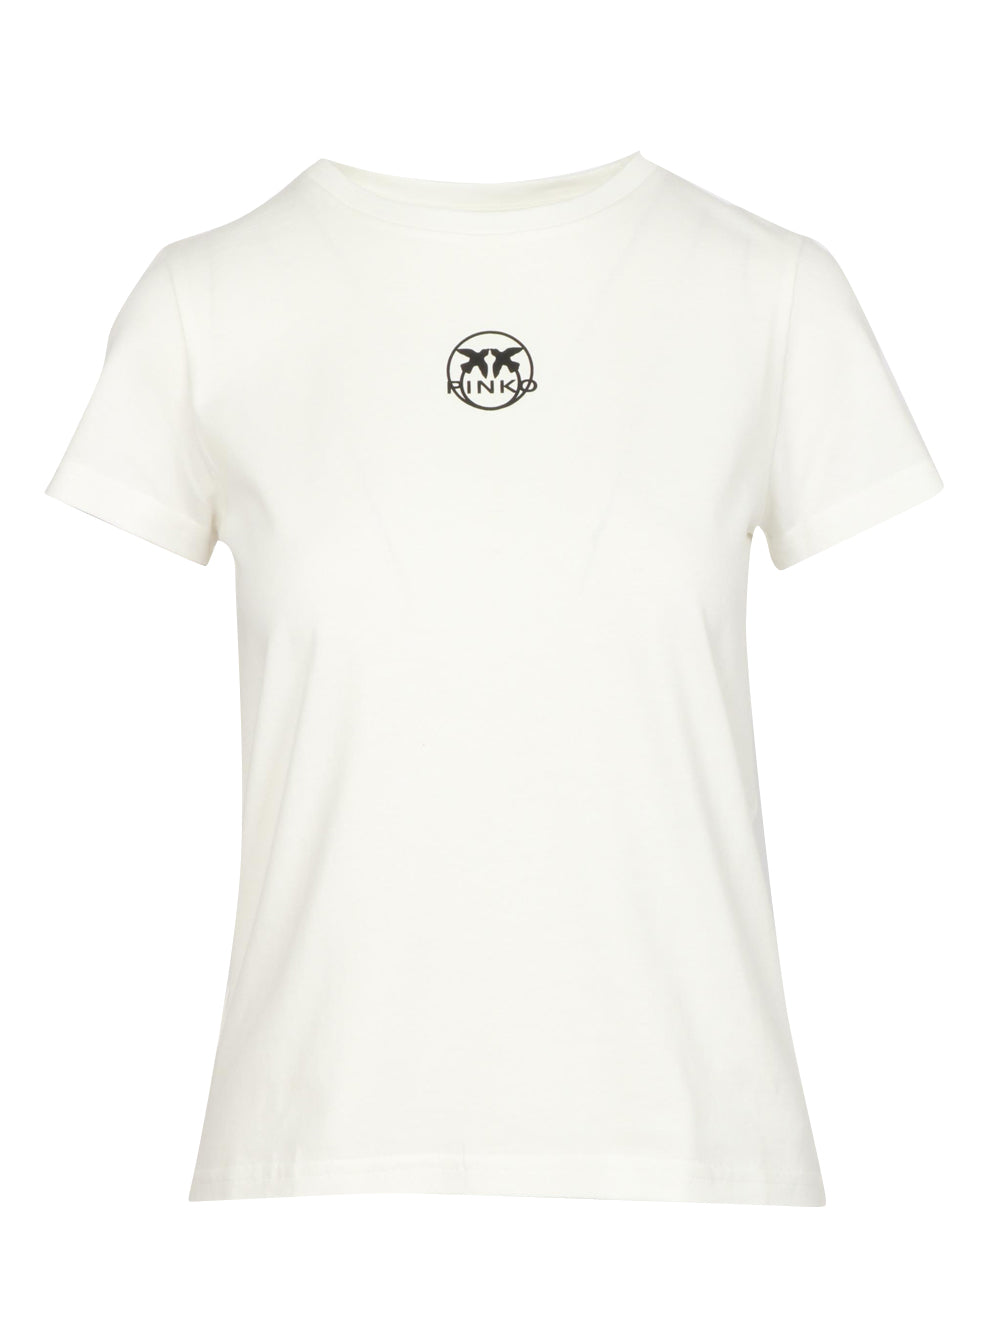 PINKO T-Shirt Bussolotto Girocollo in Cotone Bianca con Logo Bianca